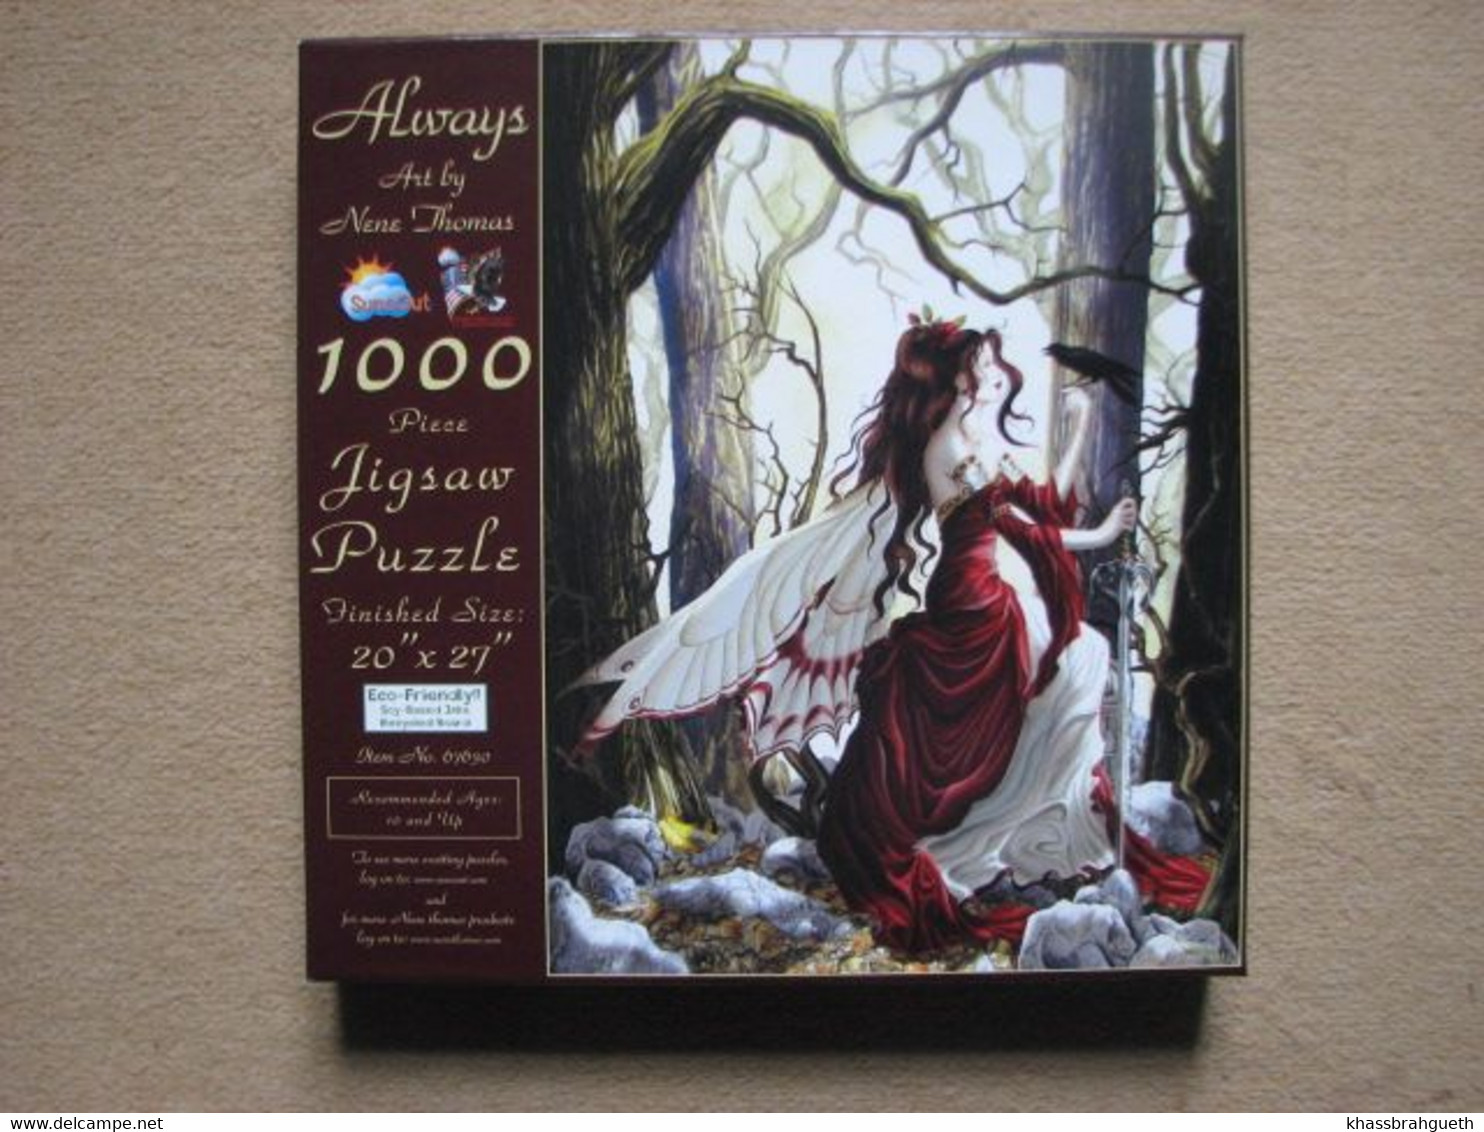 PUZZLE SUNSOUT (1000 P) - ART BY NENE THOMAS "ALWAYS" - Puzzles